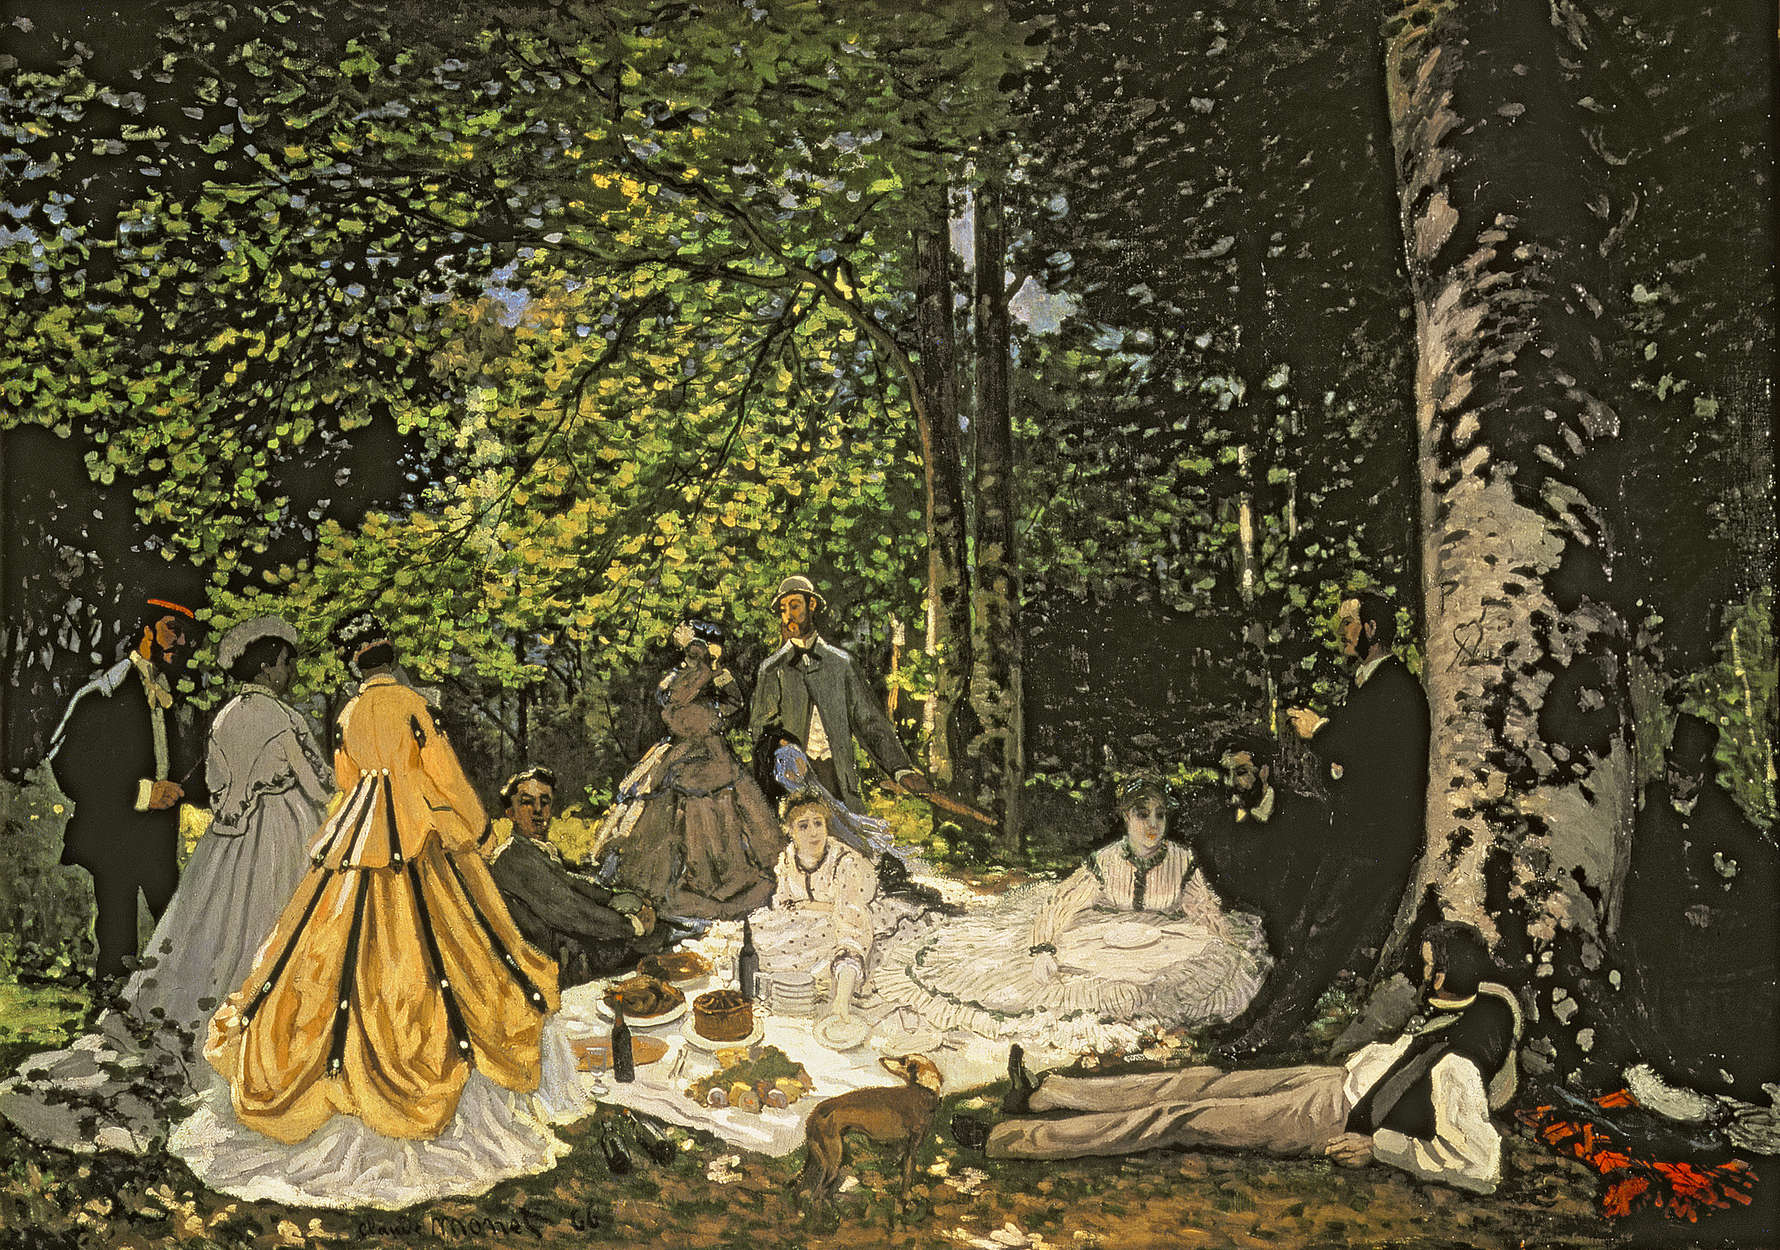             Photo wallpaper "Breakfast in the green" by Claude Monet
        